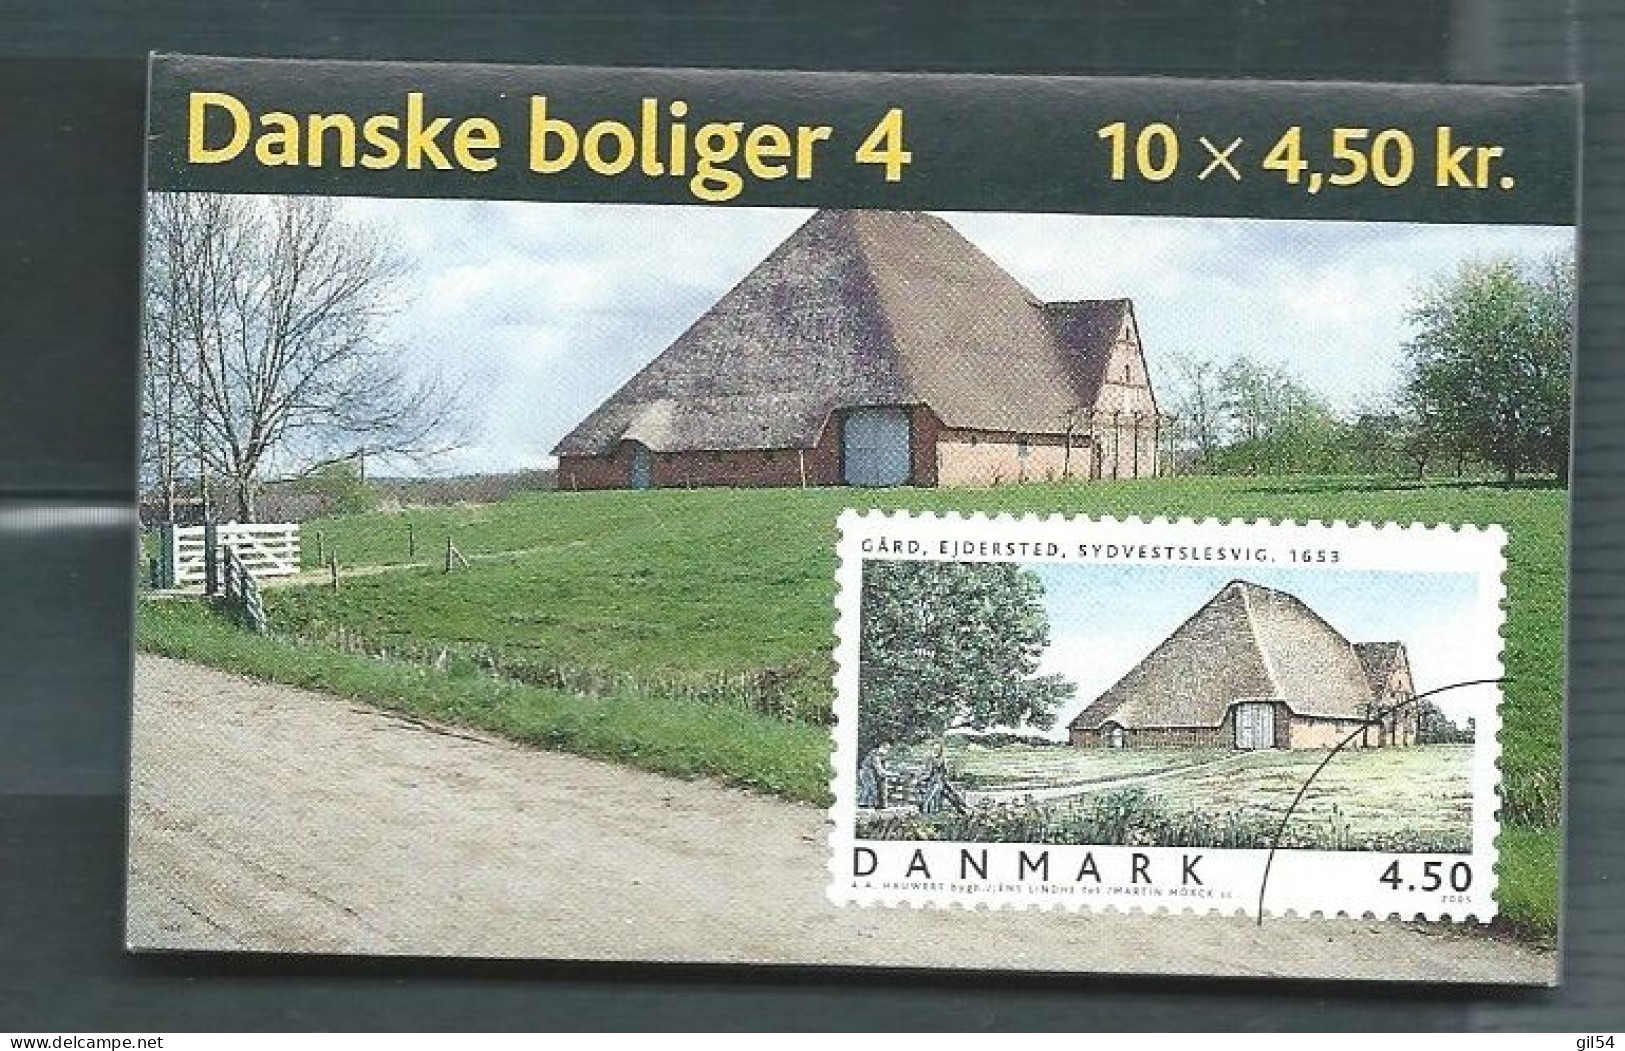 2005 MNH Danmark, Booklet S142 Postfris  Pb 20605 - Postzegelboekjes